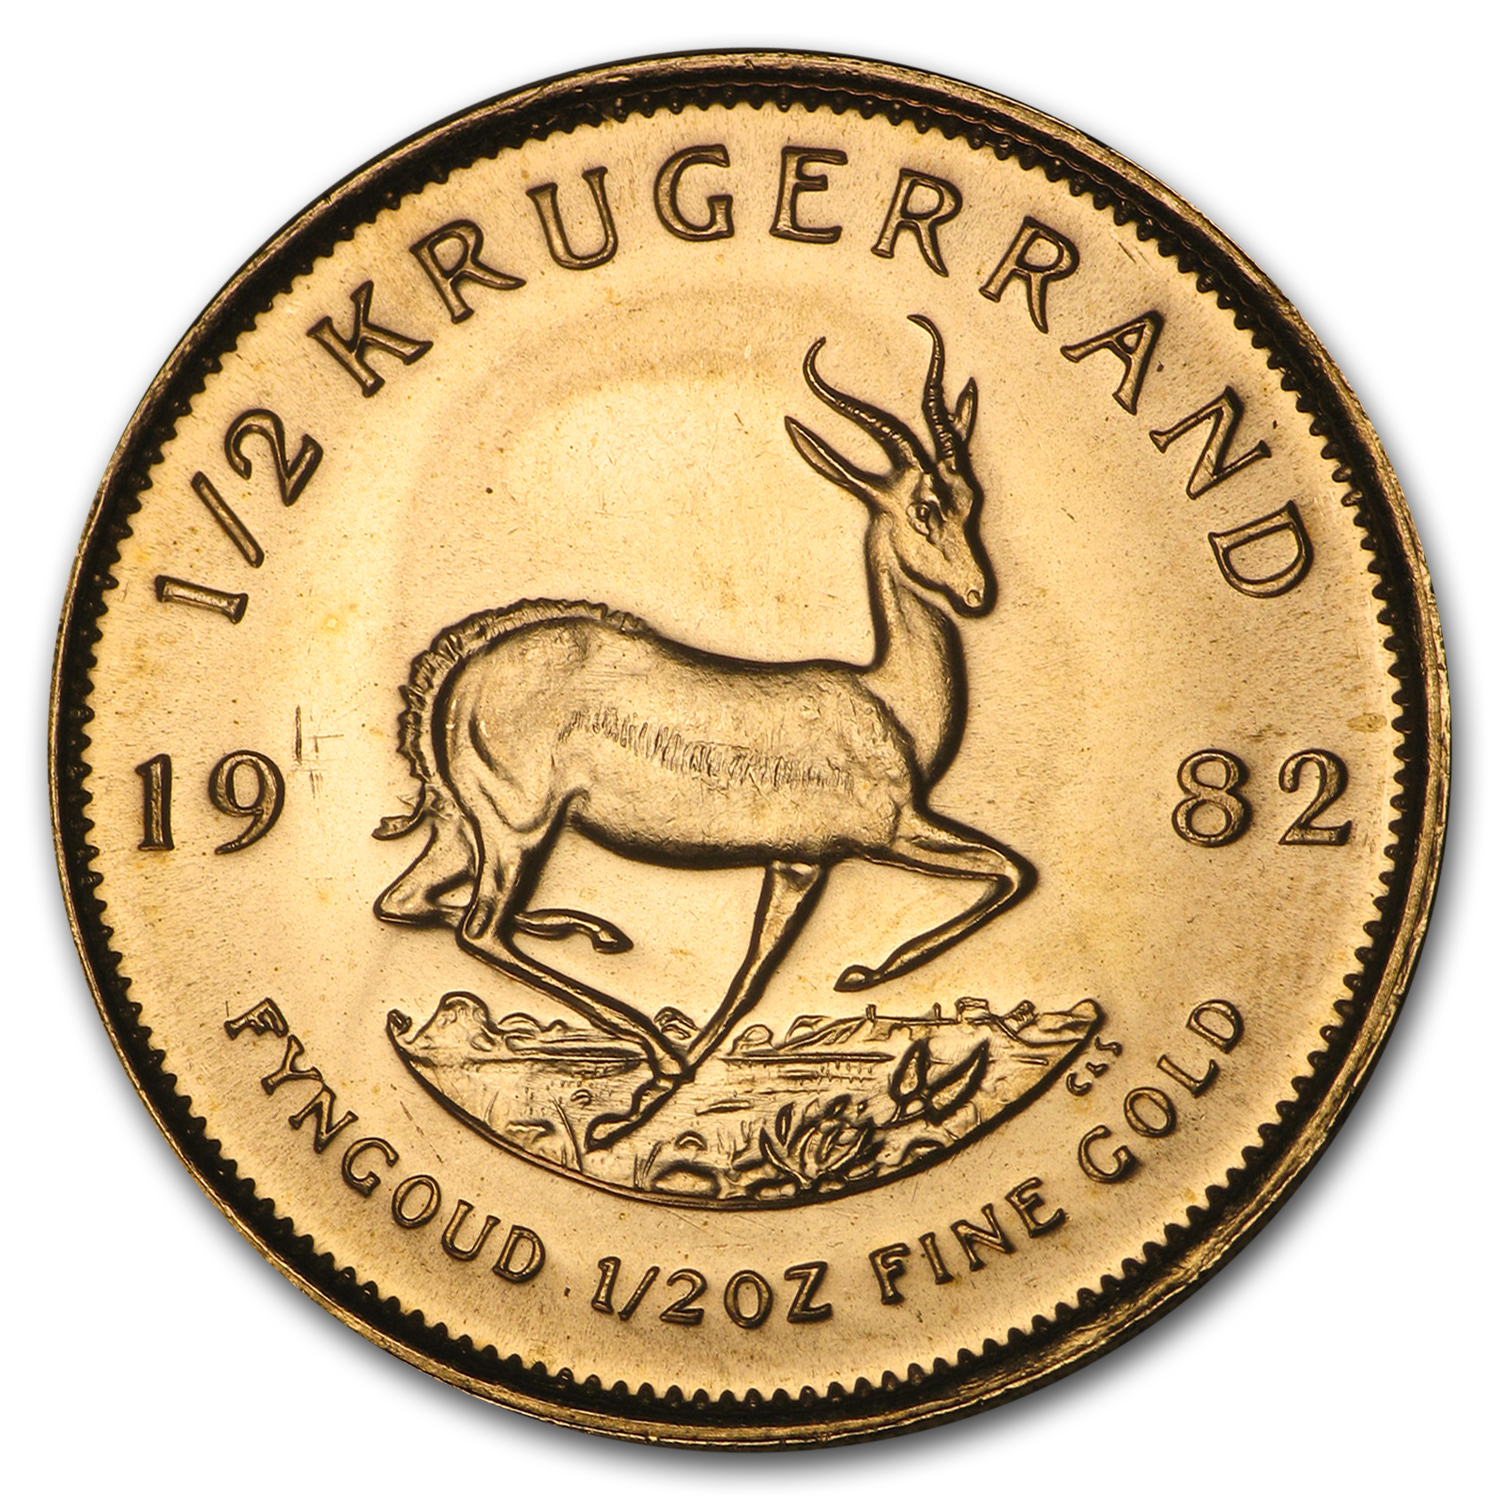 Buy 1982 South Africa 1/2 oz Gold Krugerrand - Click Image to Close